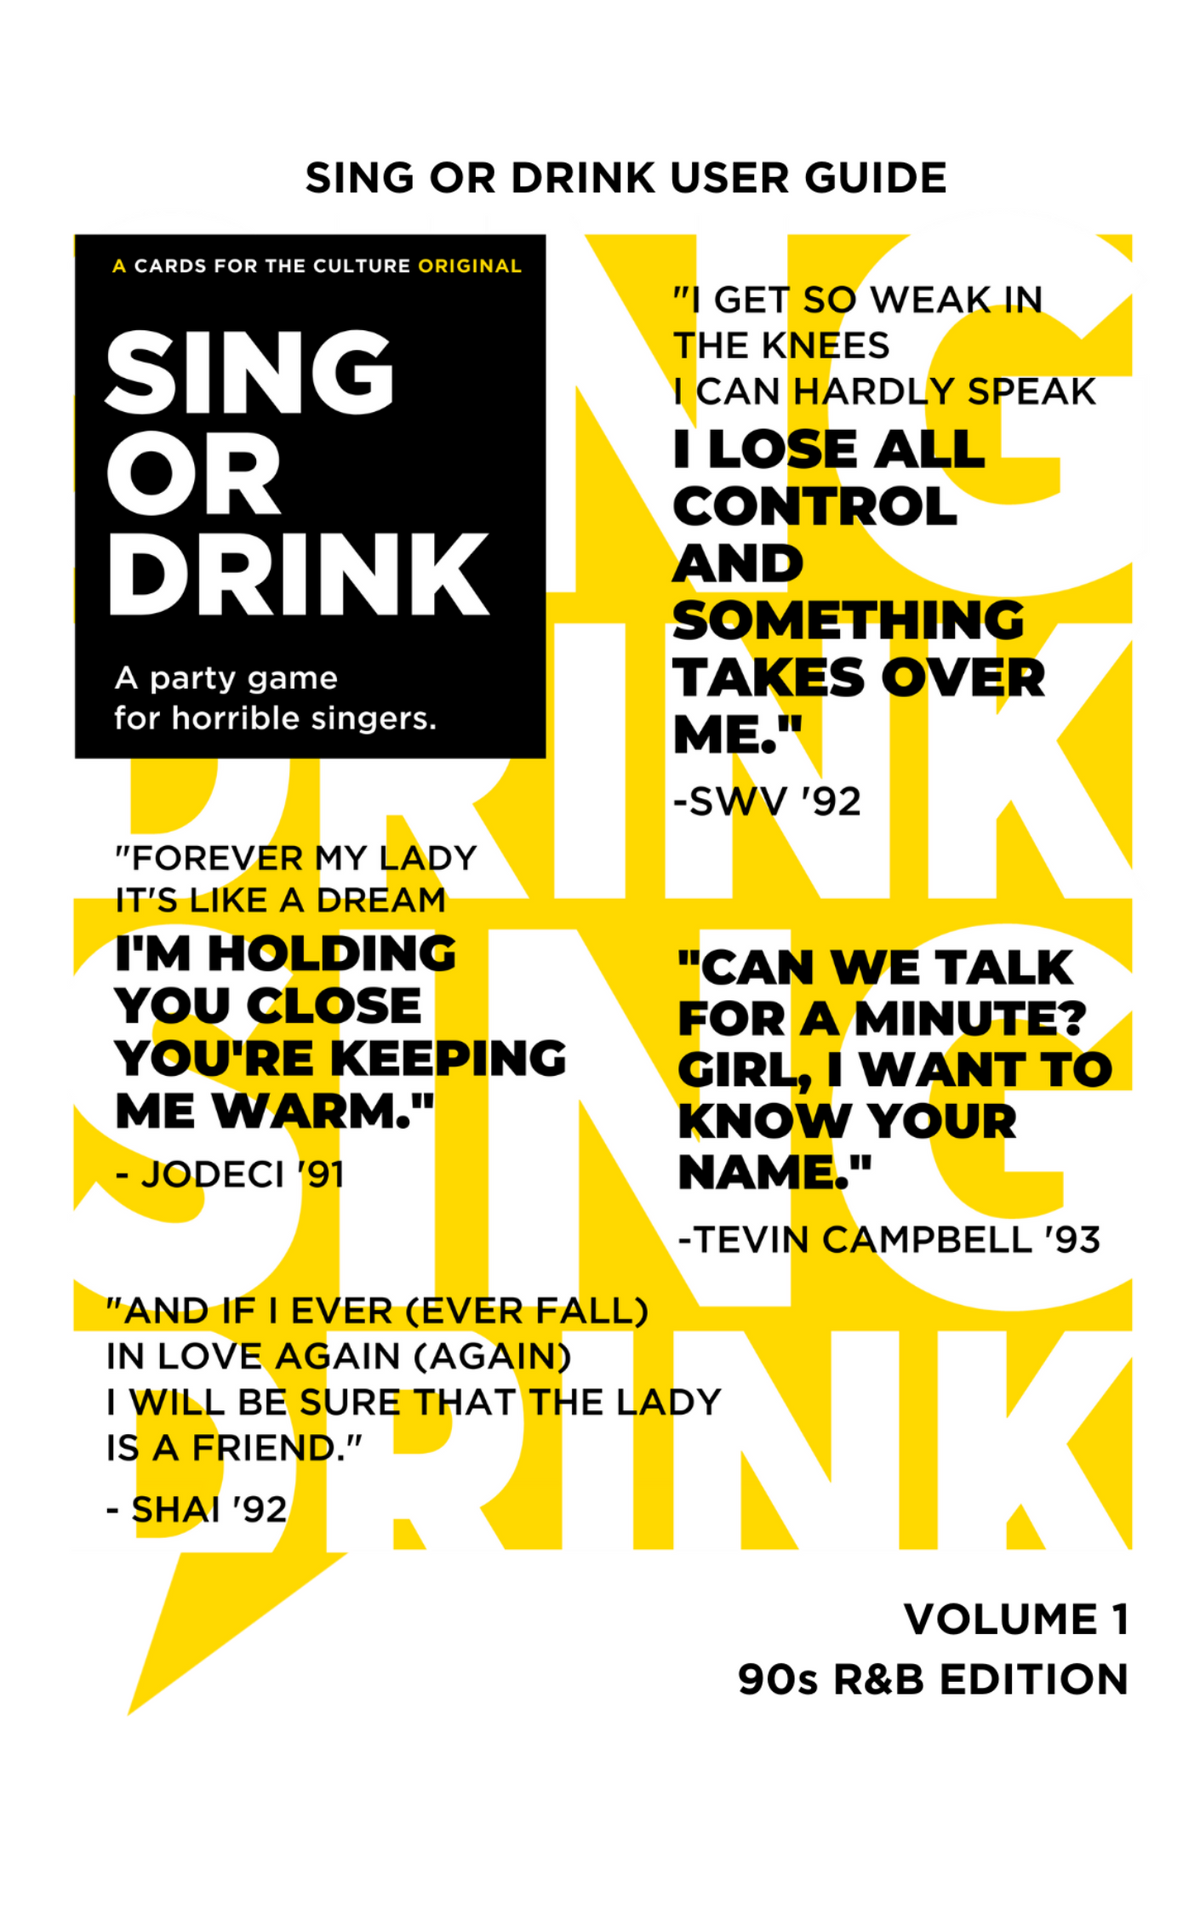 SING OR DRINK™ - VOLUME 1: 90s R&B EDITION – Sing or Drink™